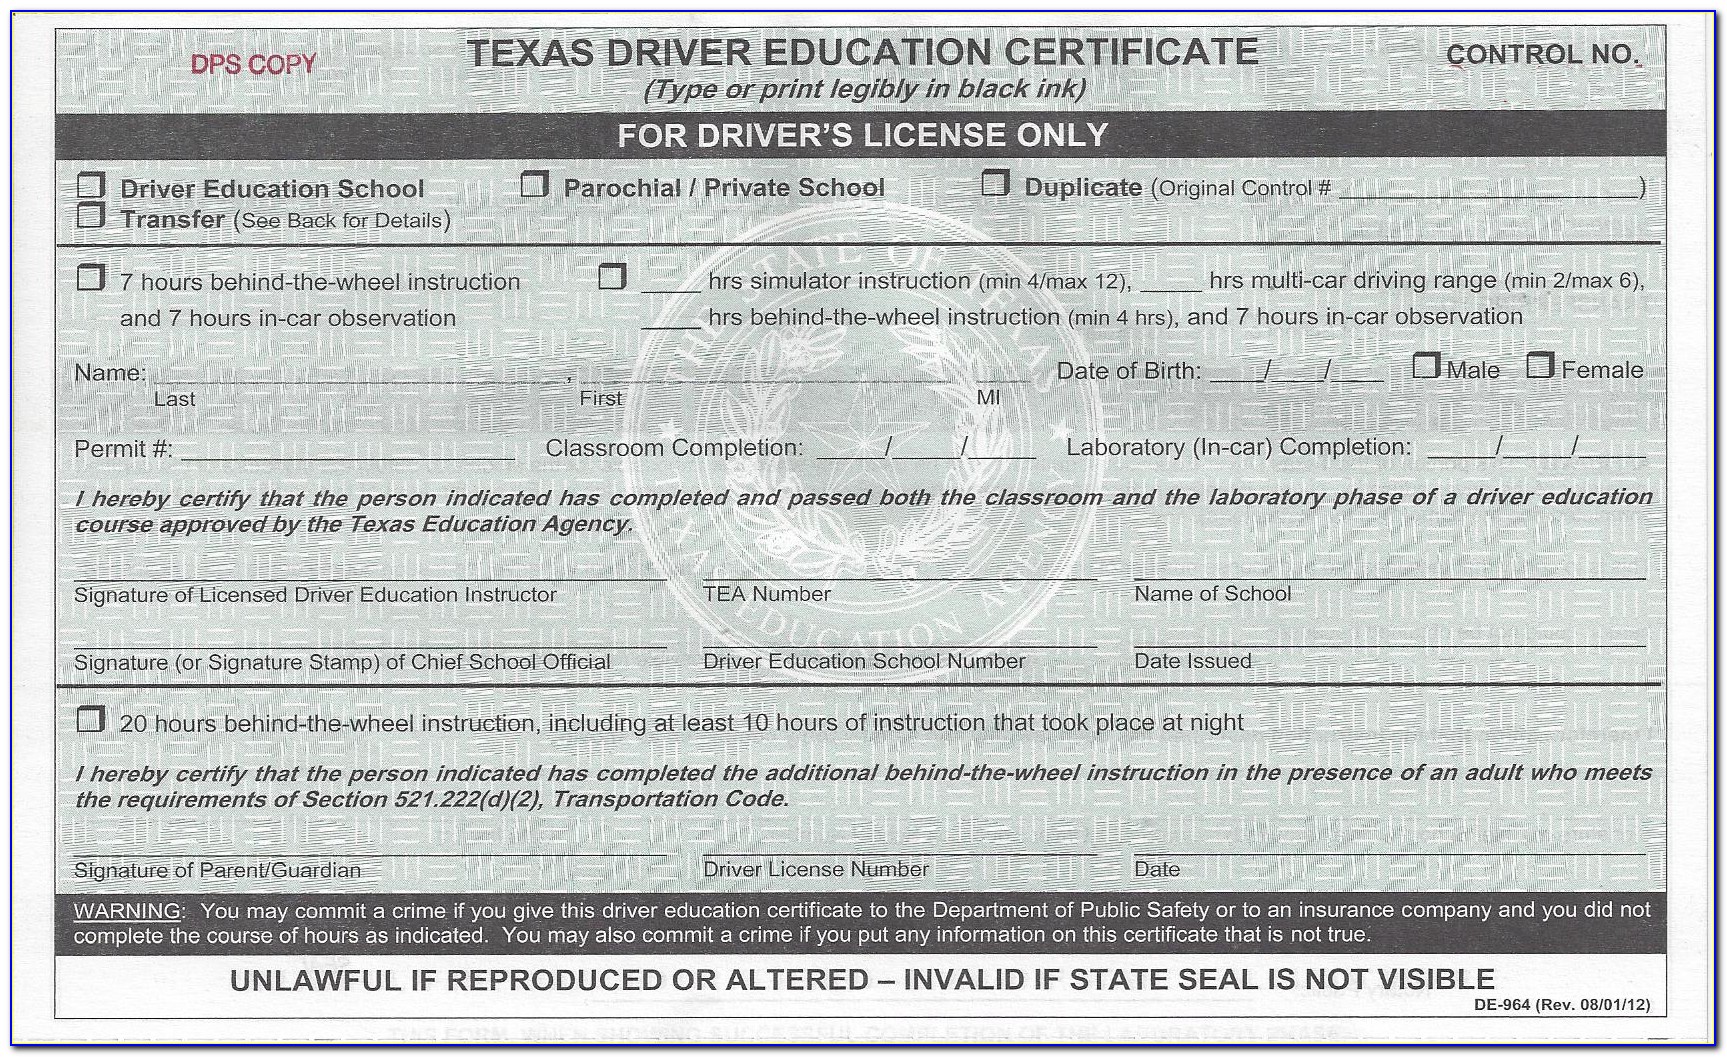 Texas Driver Education Certificate (de 964e)